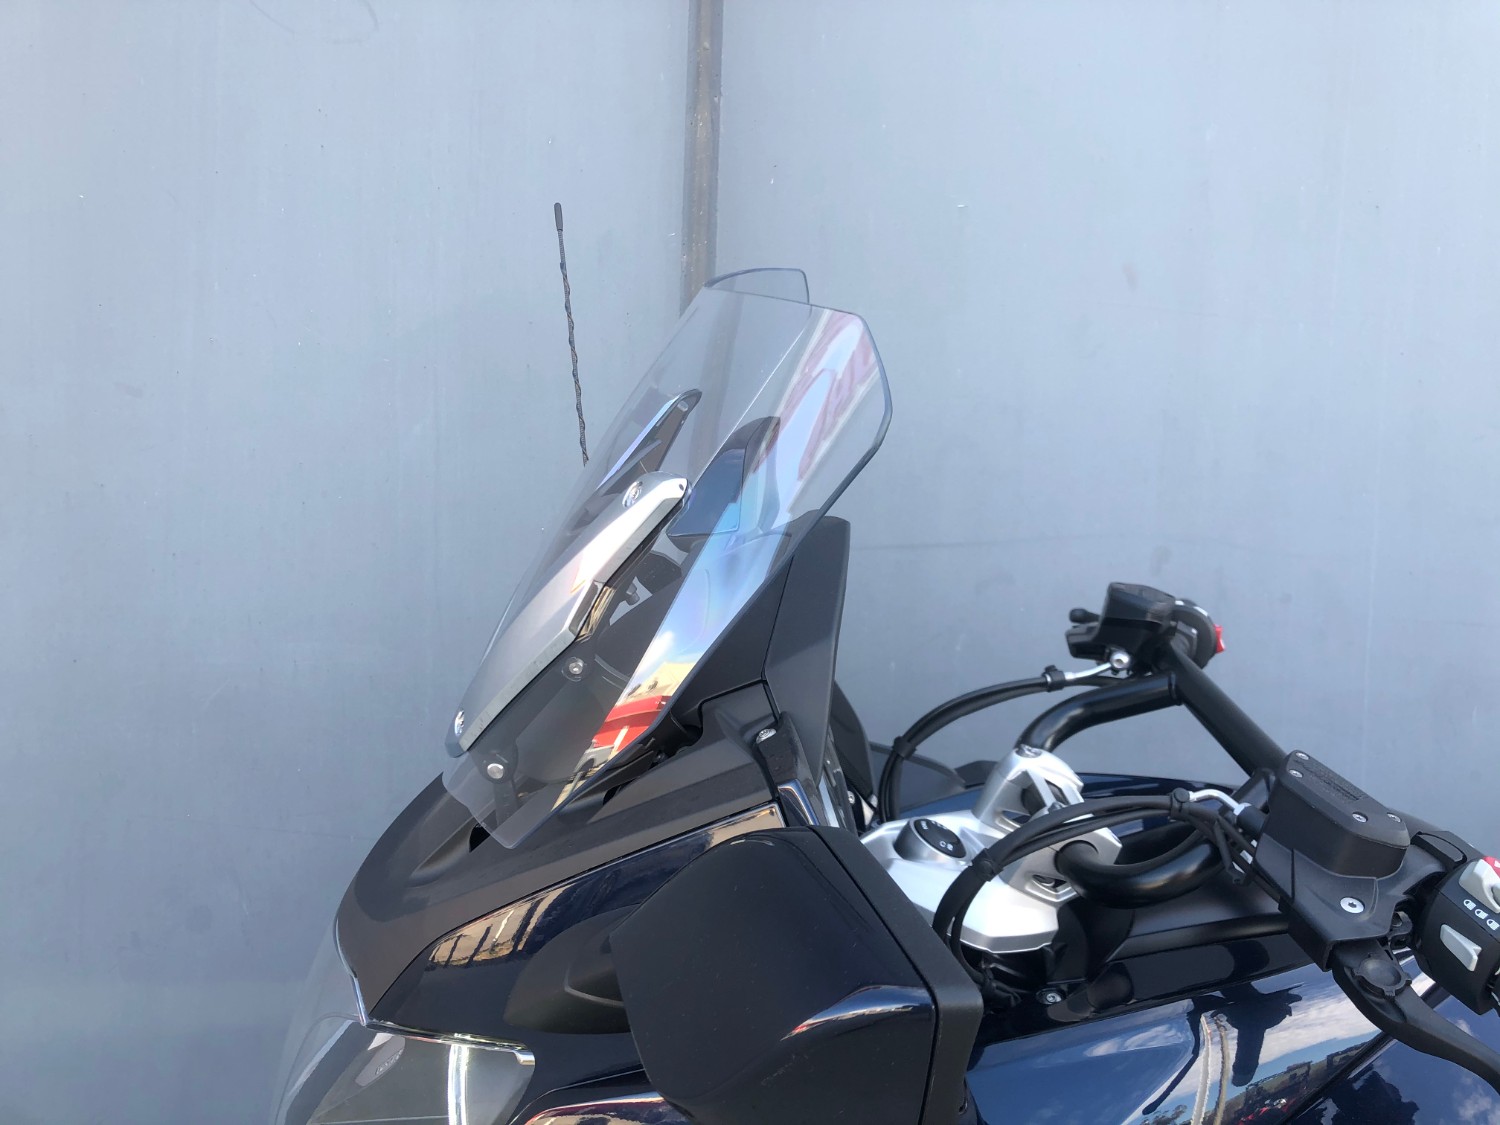 2019 BMW K1600 B Deluxe Motorcycle Image 14